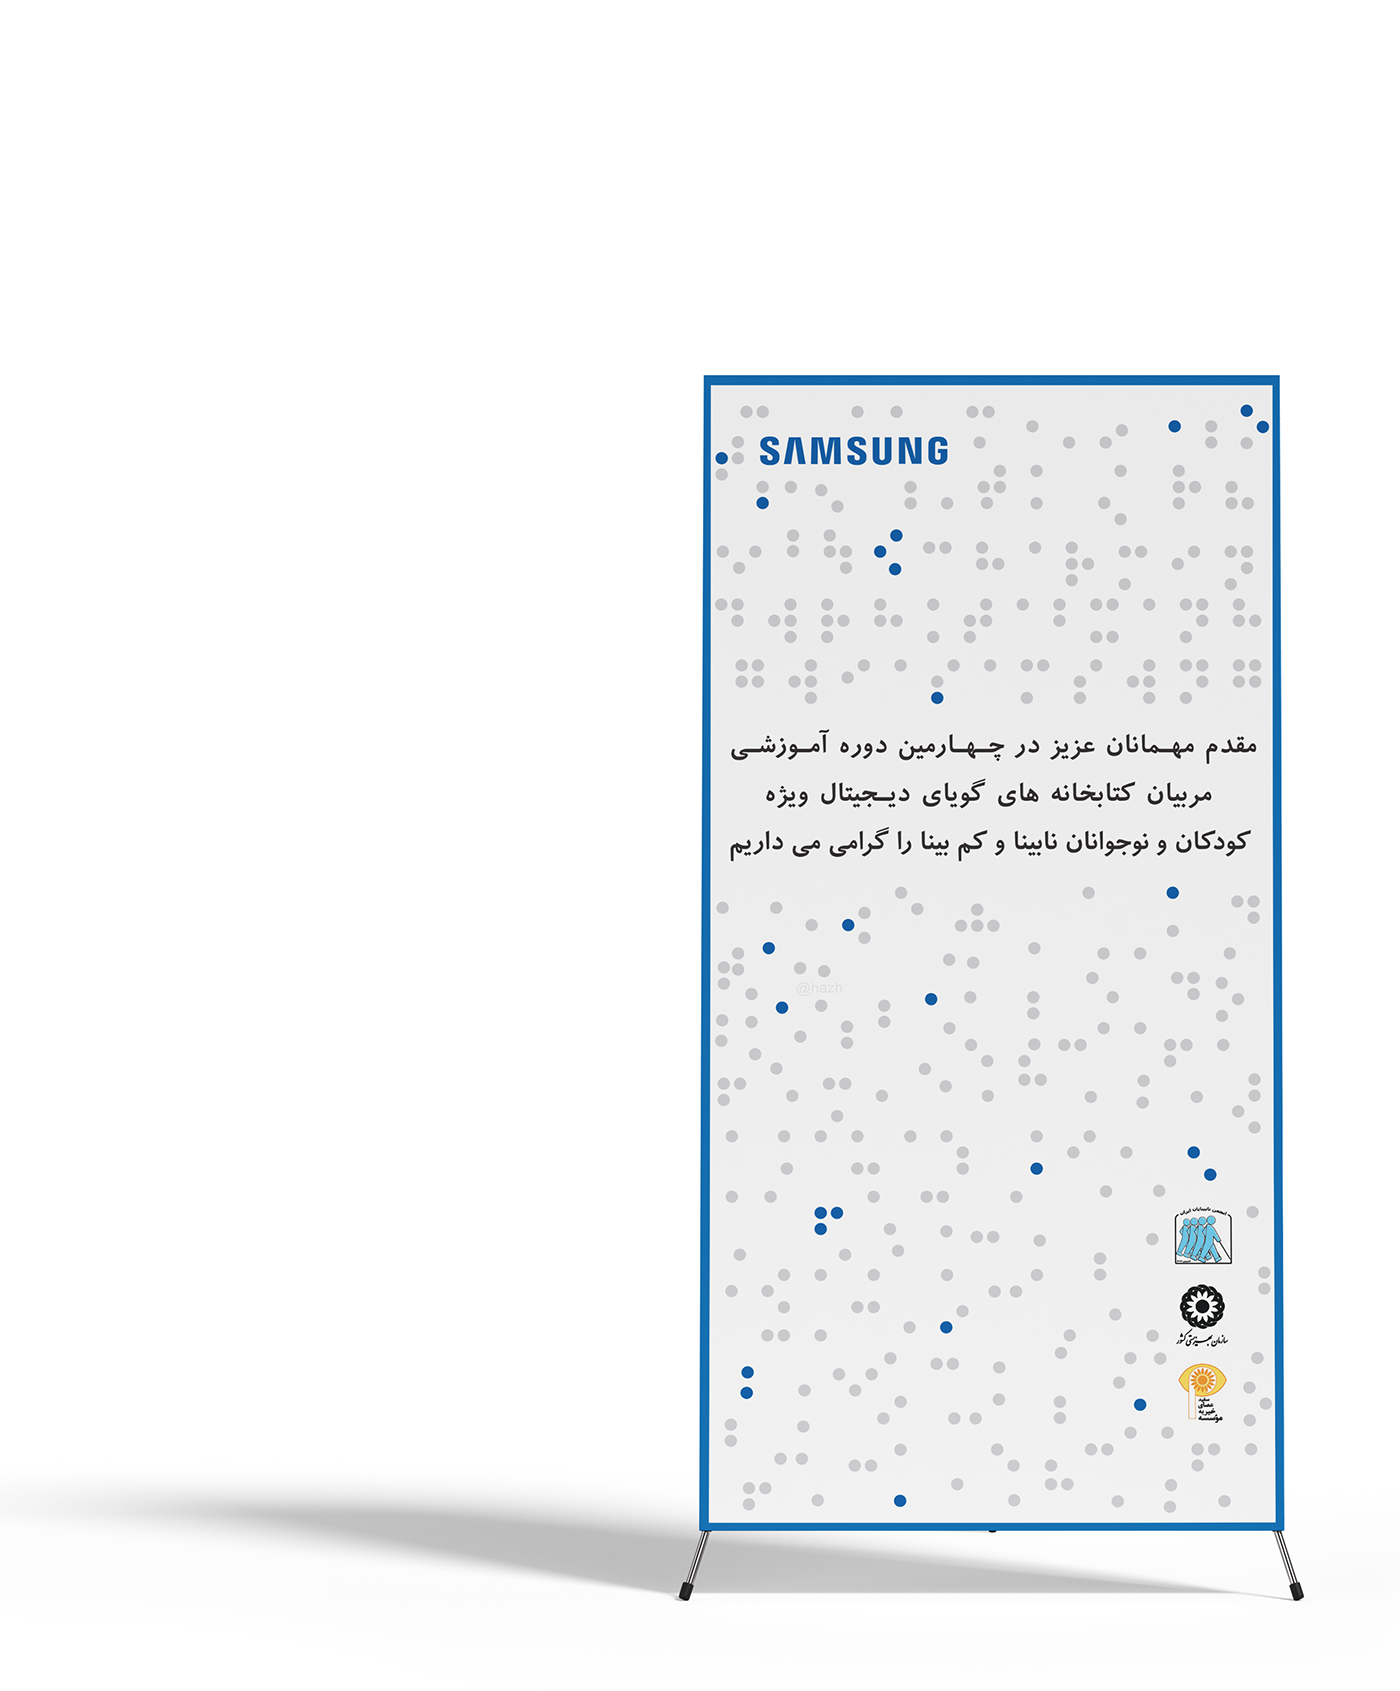 Samsung blind Visually impaired visual idenityt braille visual identity Braille HAzh تتتتا 제주